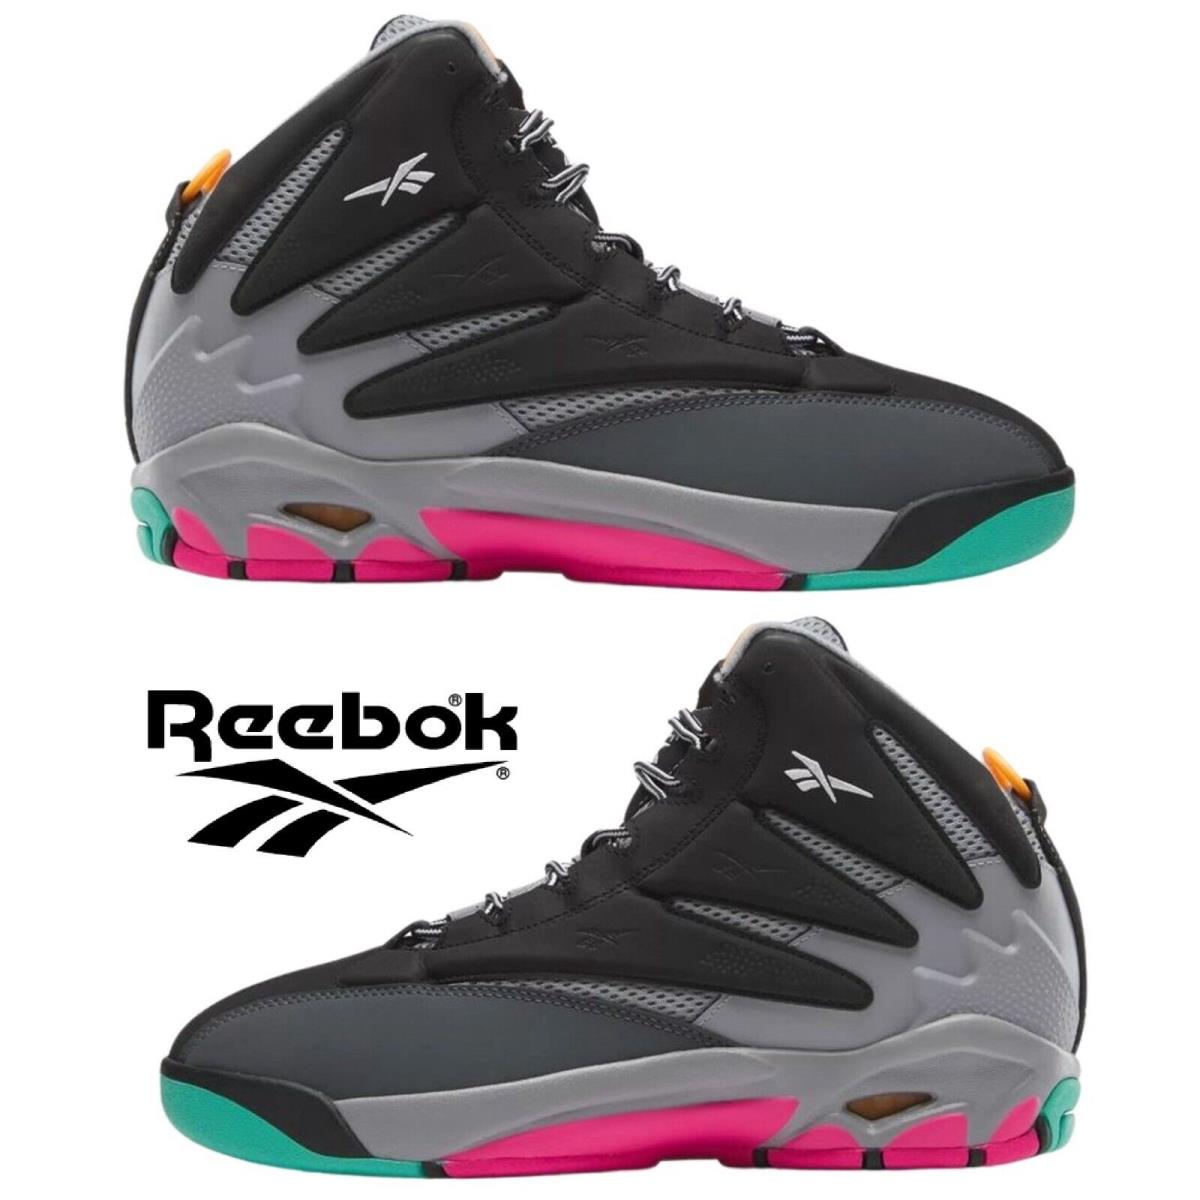 Reebok The Blast Basketball Shoes Men`s Sneakers Running Casual Sport Retro - Black, Manufacturer: Core Black / Laser Pink / Cyber Mint